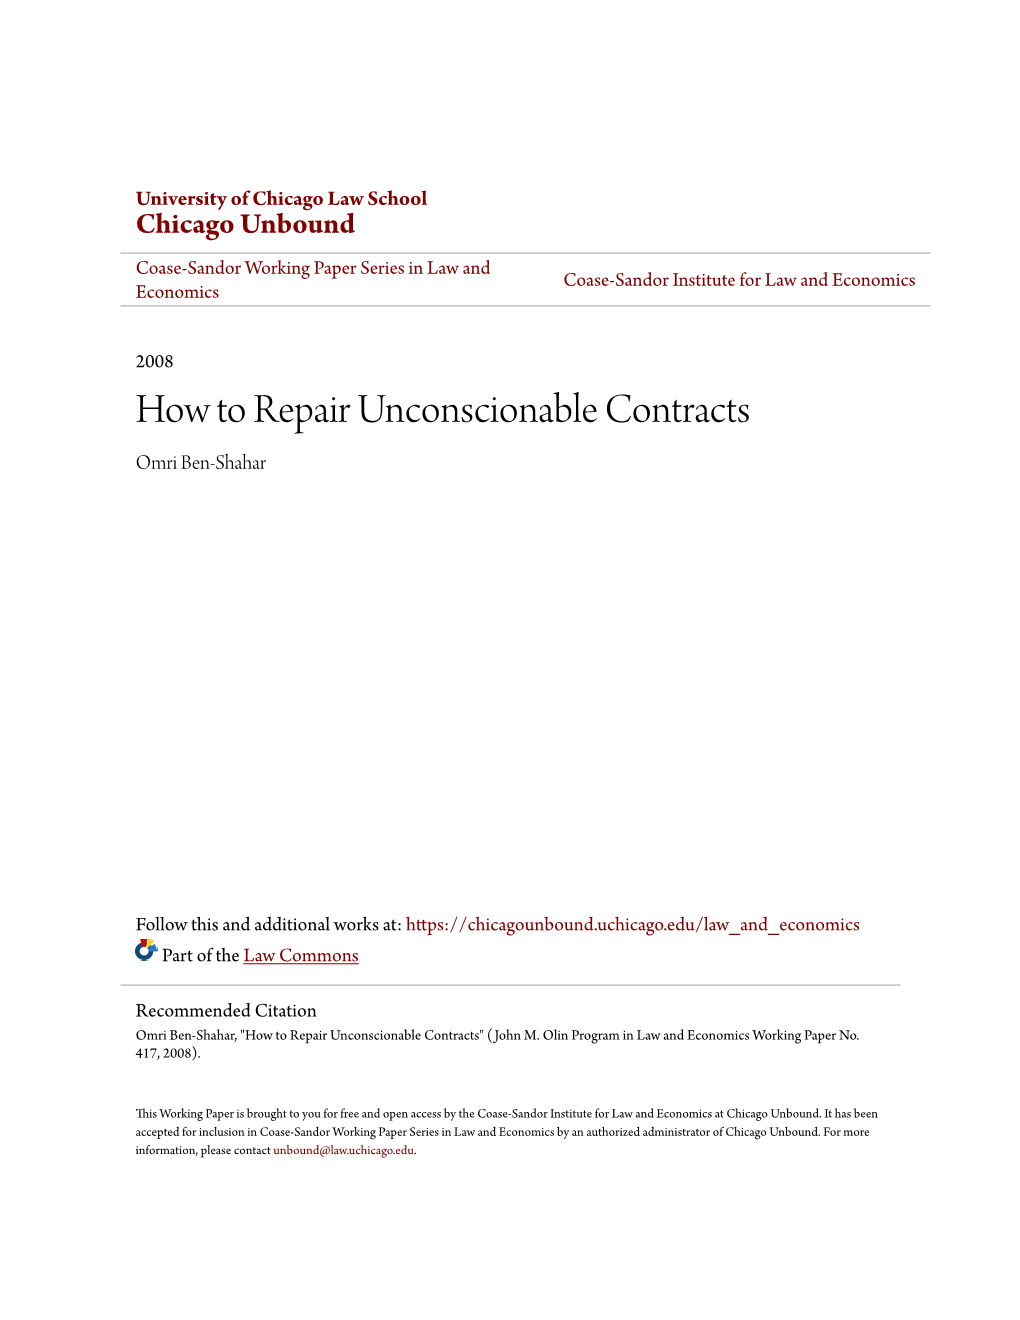 How to Repair Unconscionable Contracts Omri Ben-Shahar